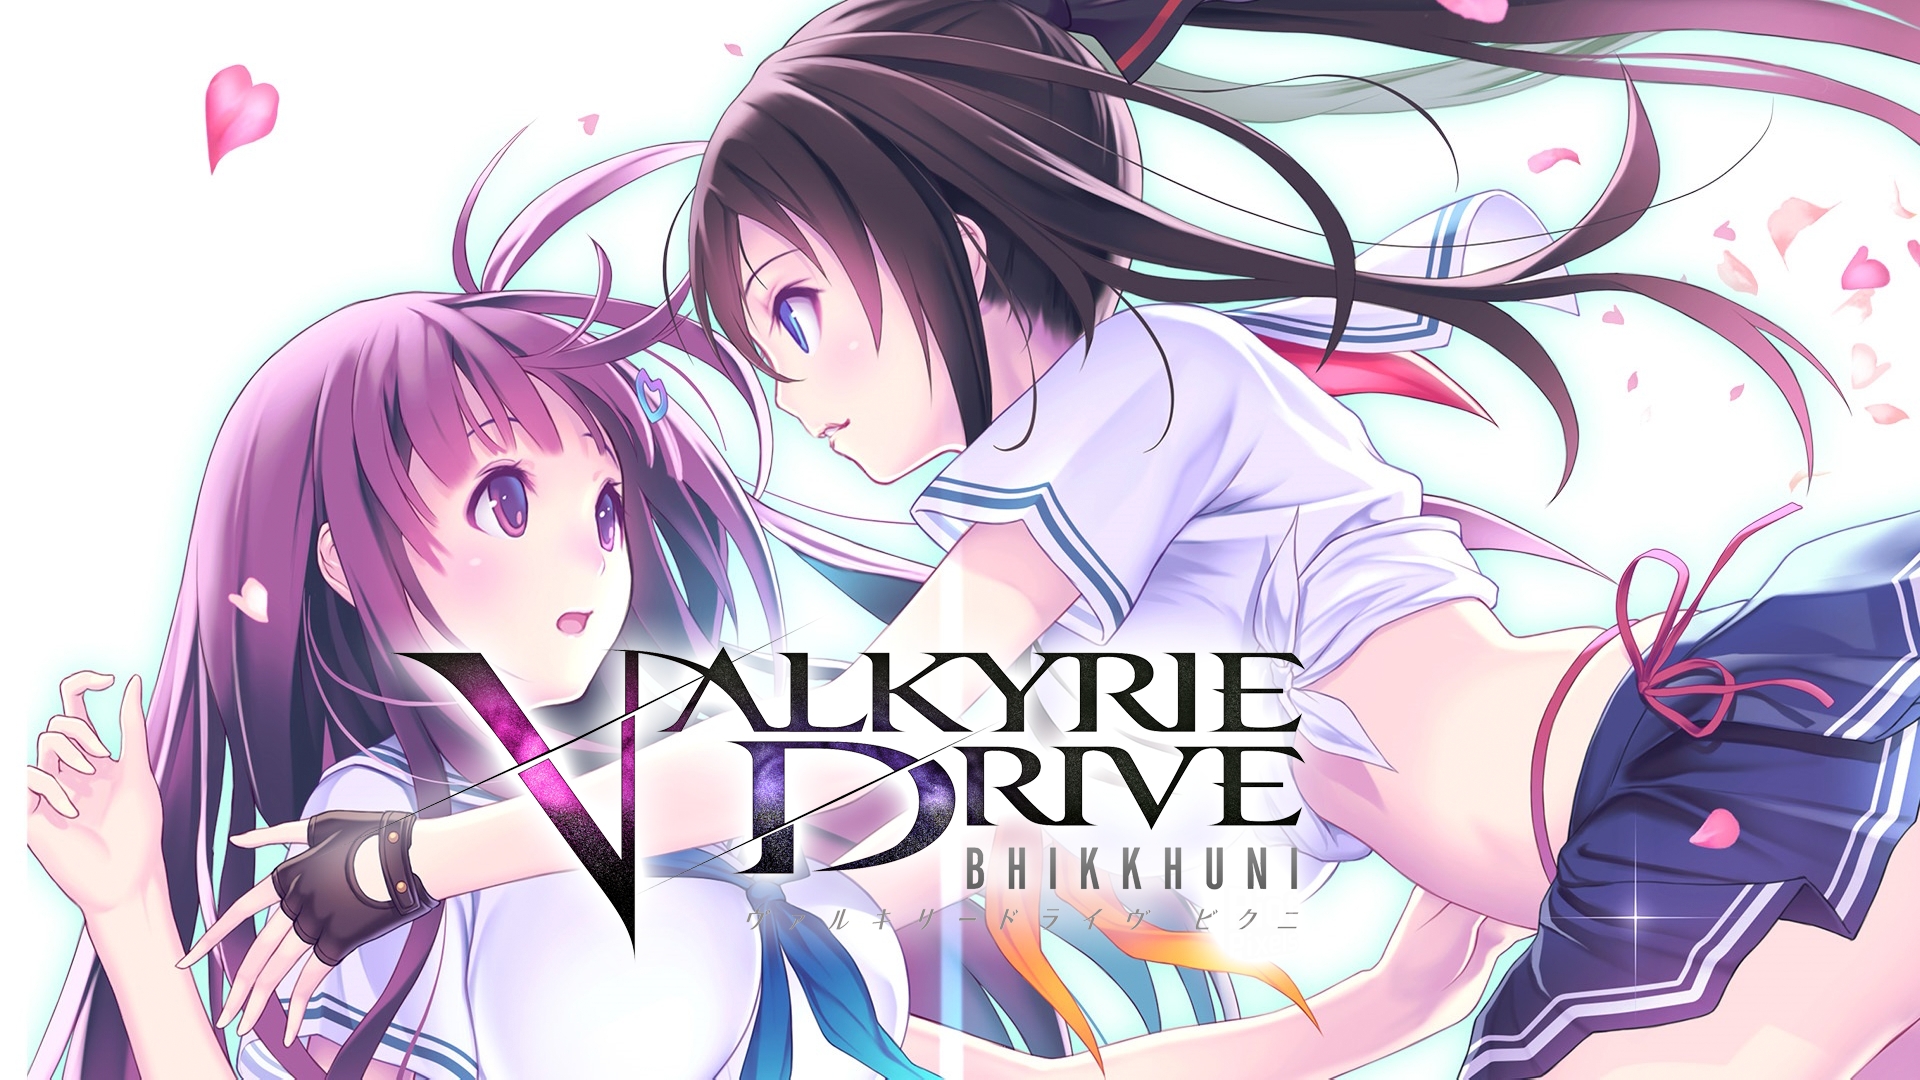 Valkyrie Drive: Bhikkhuni coming to PC via Steam this summer - Gematsu